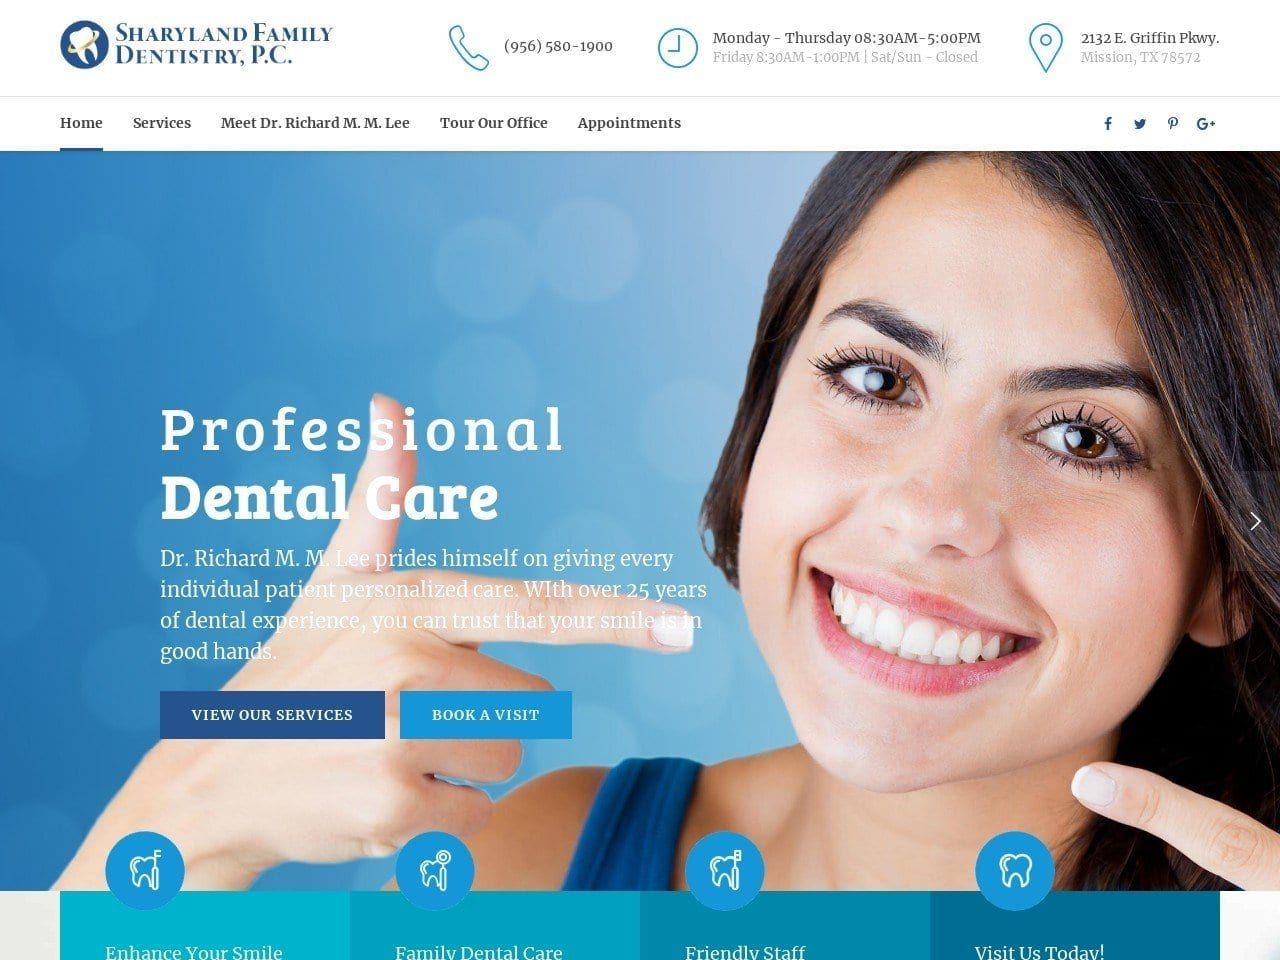 Sharyland Family Dentist Website Screenshot from sharylandfamilydentistry.com